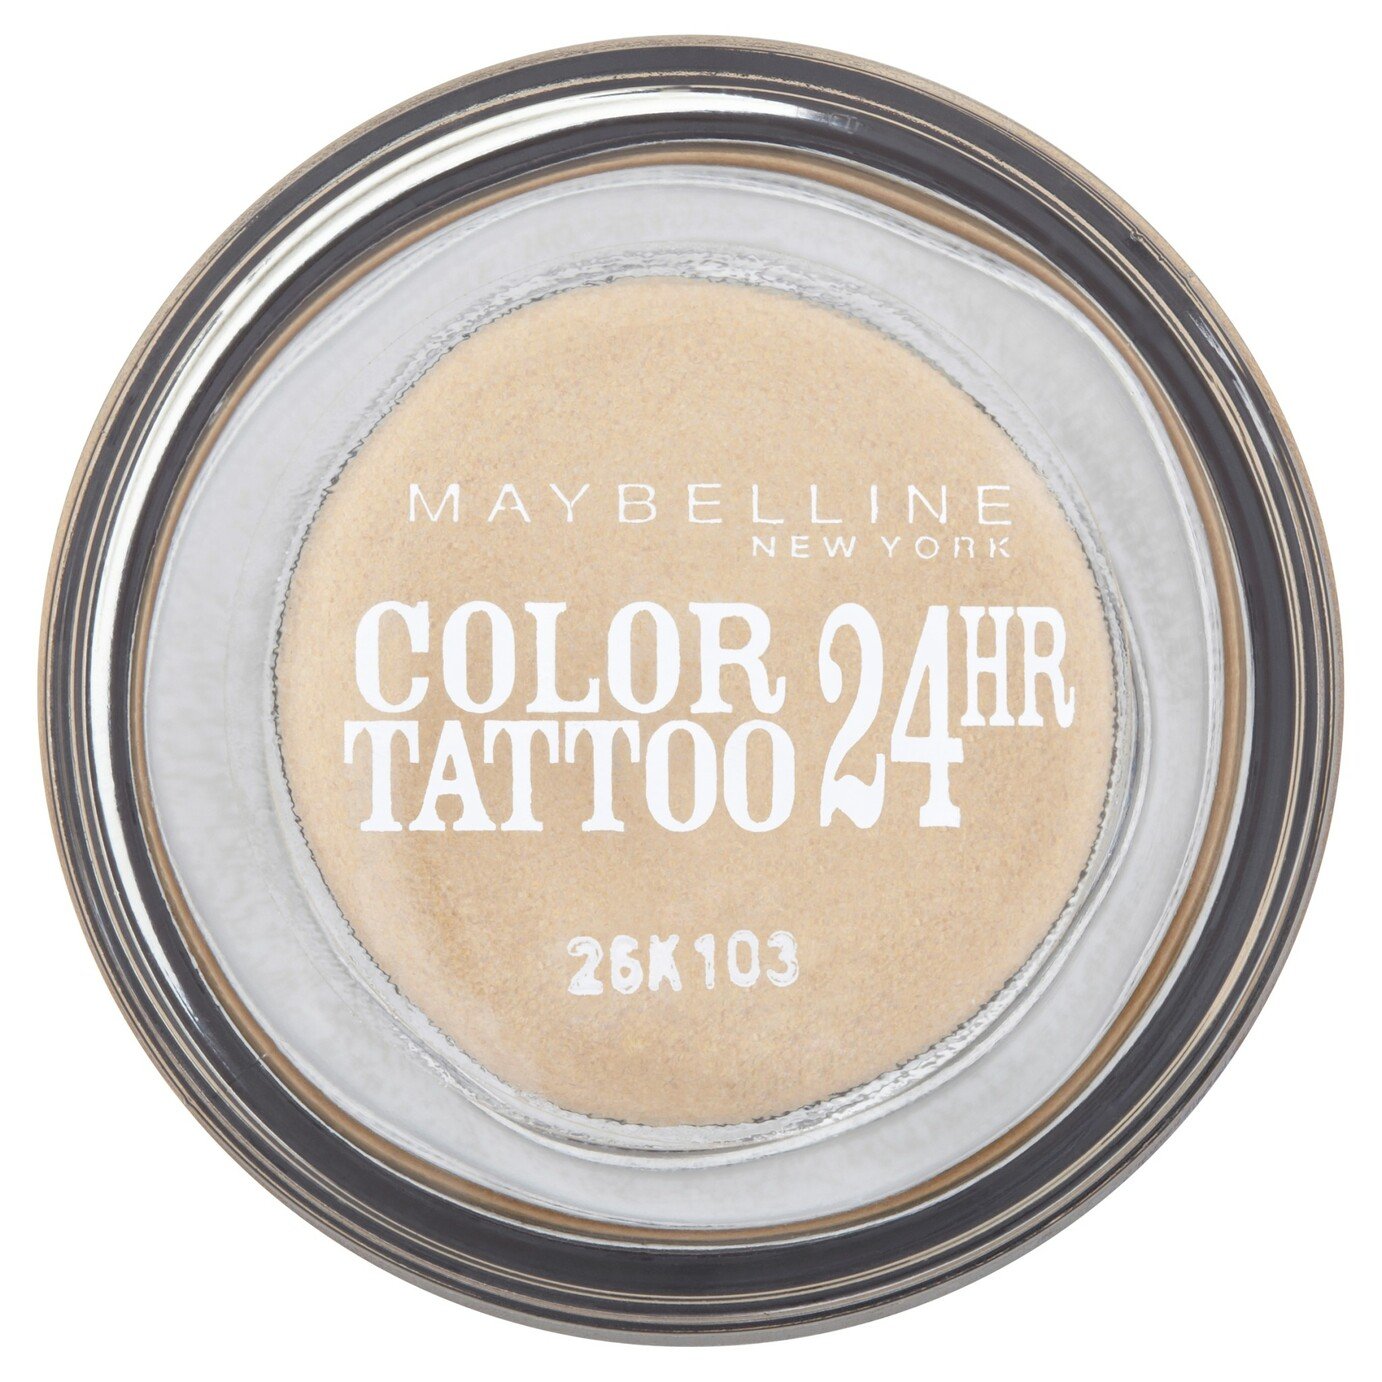 Maybelline Color Tattoo 24hr Eyeshadow - 05 Eternal Gold